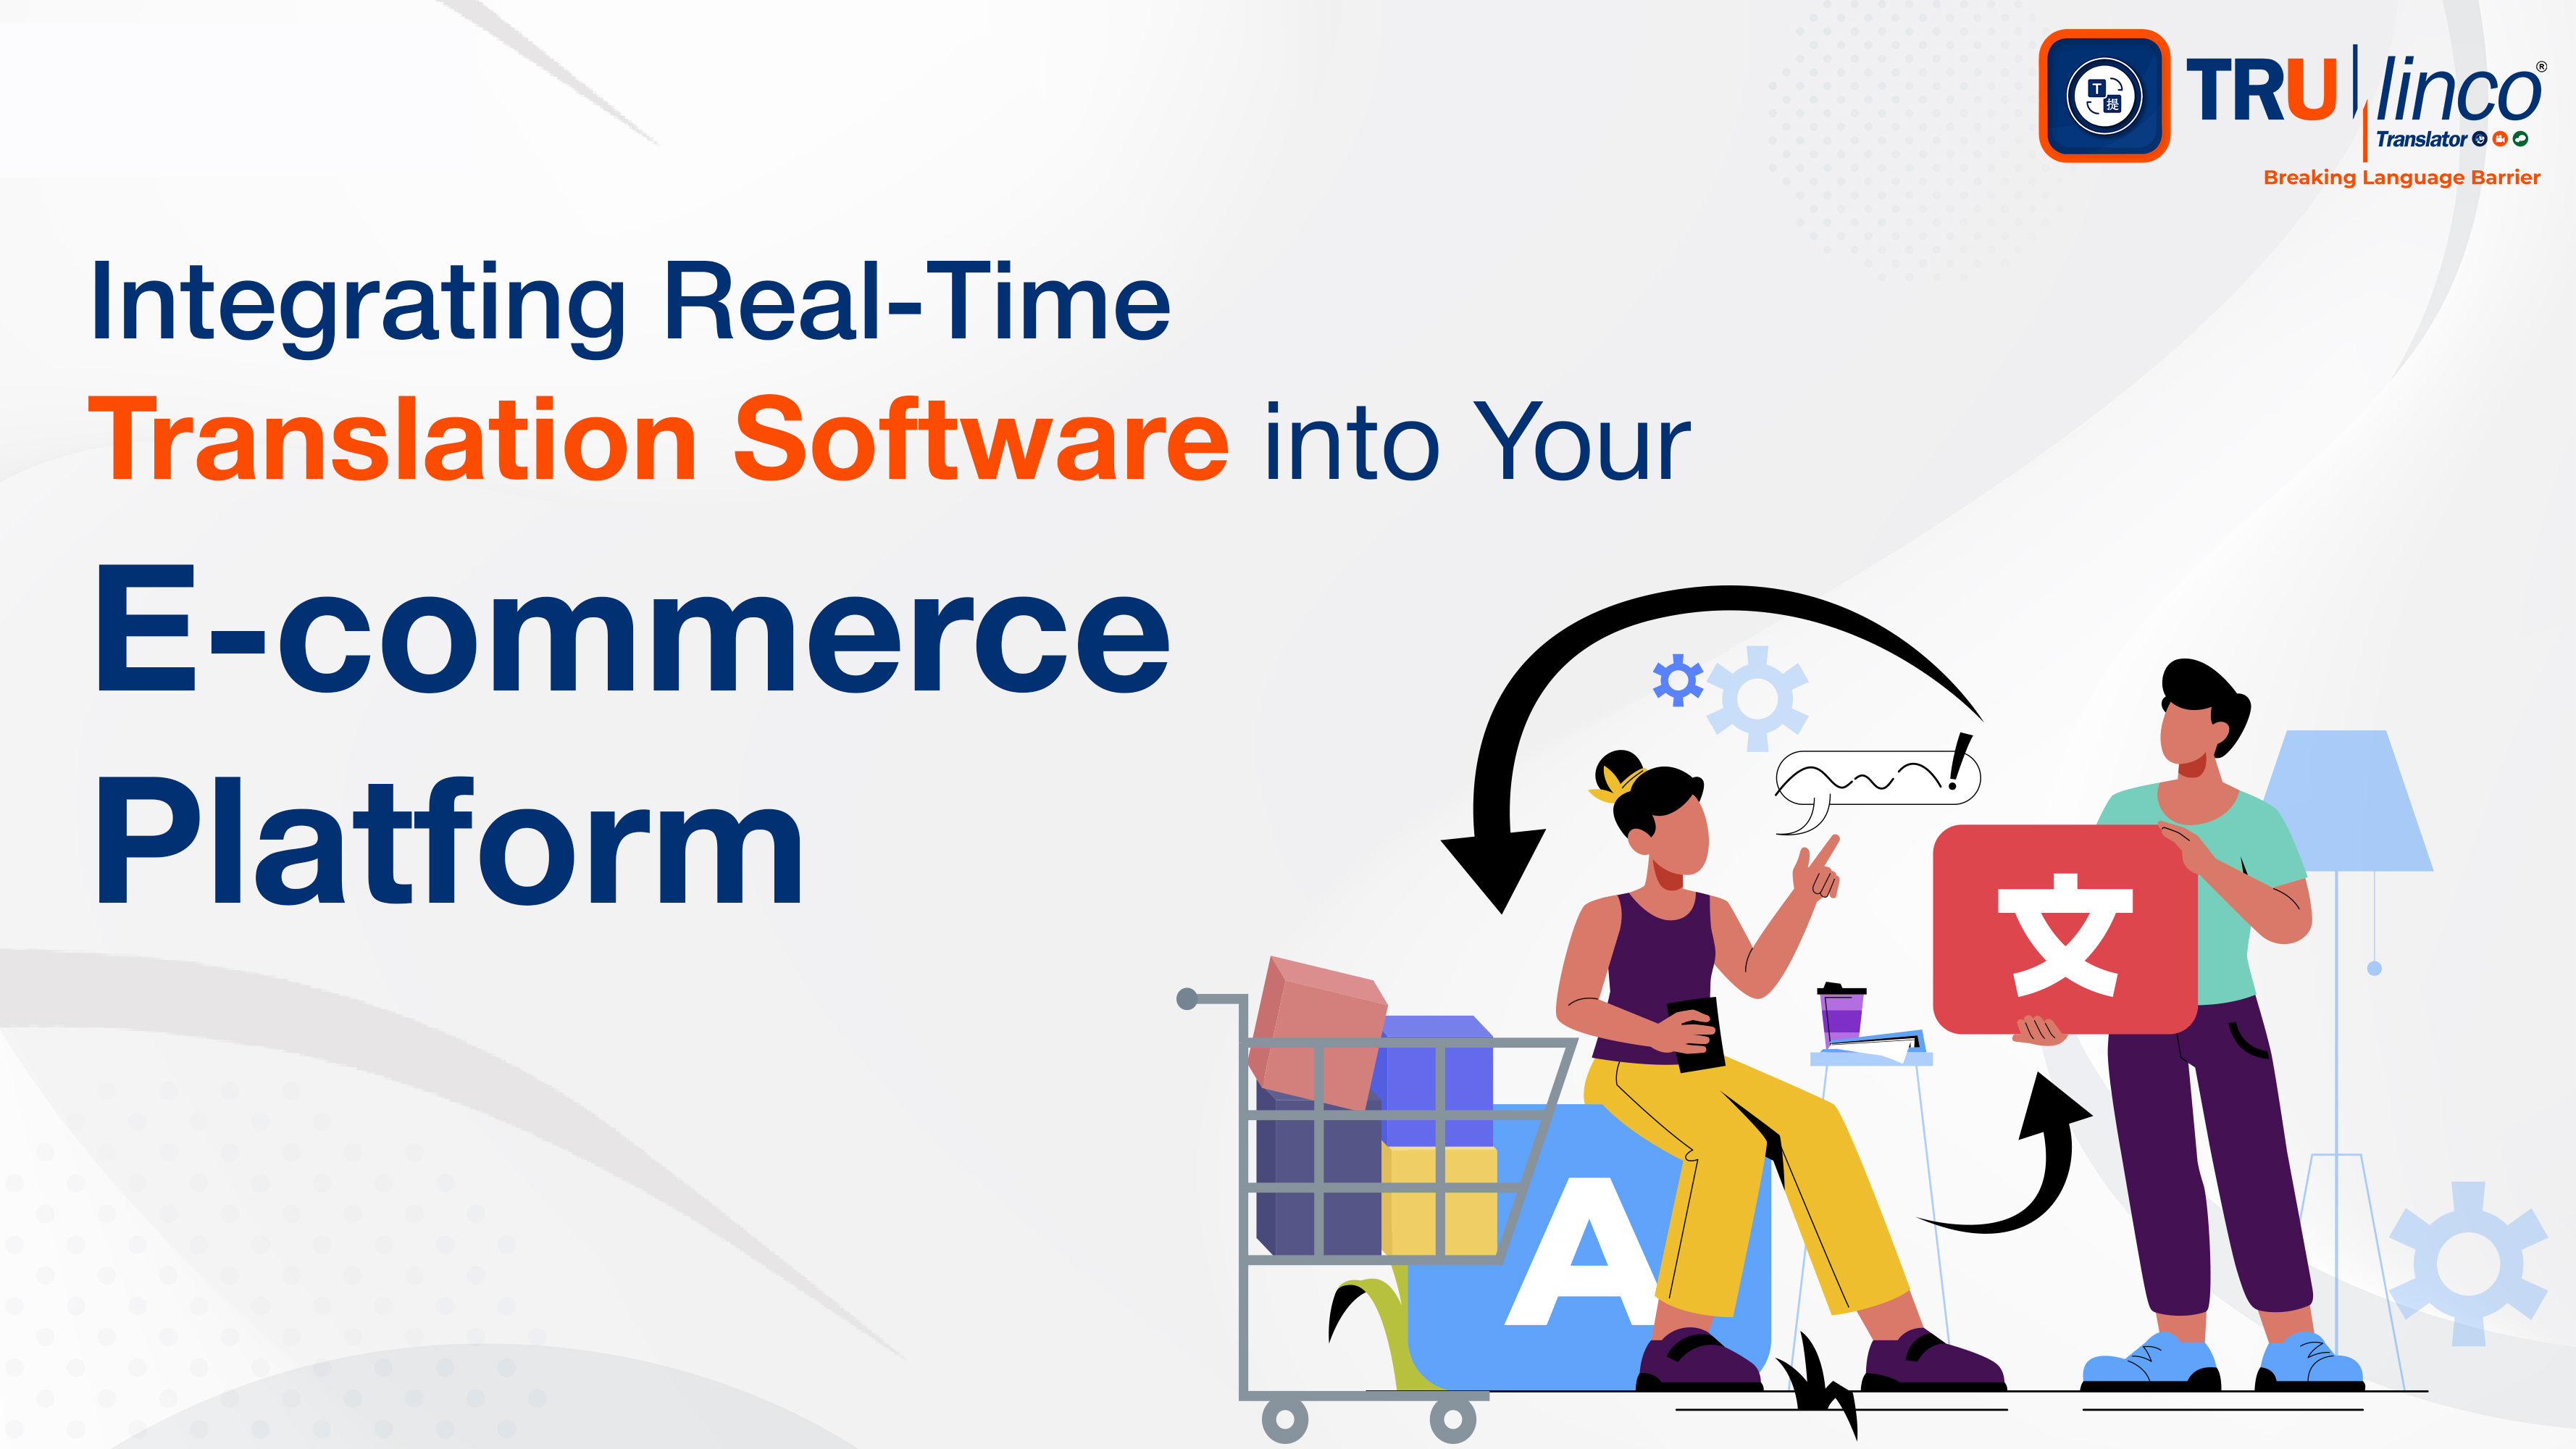 Integrating Real-Time Translation into Your E-commerce Platform